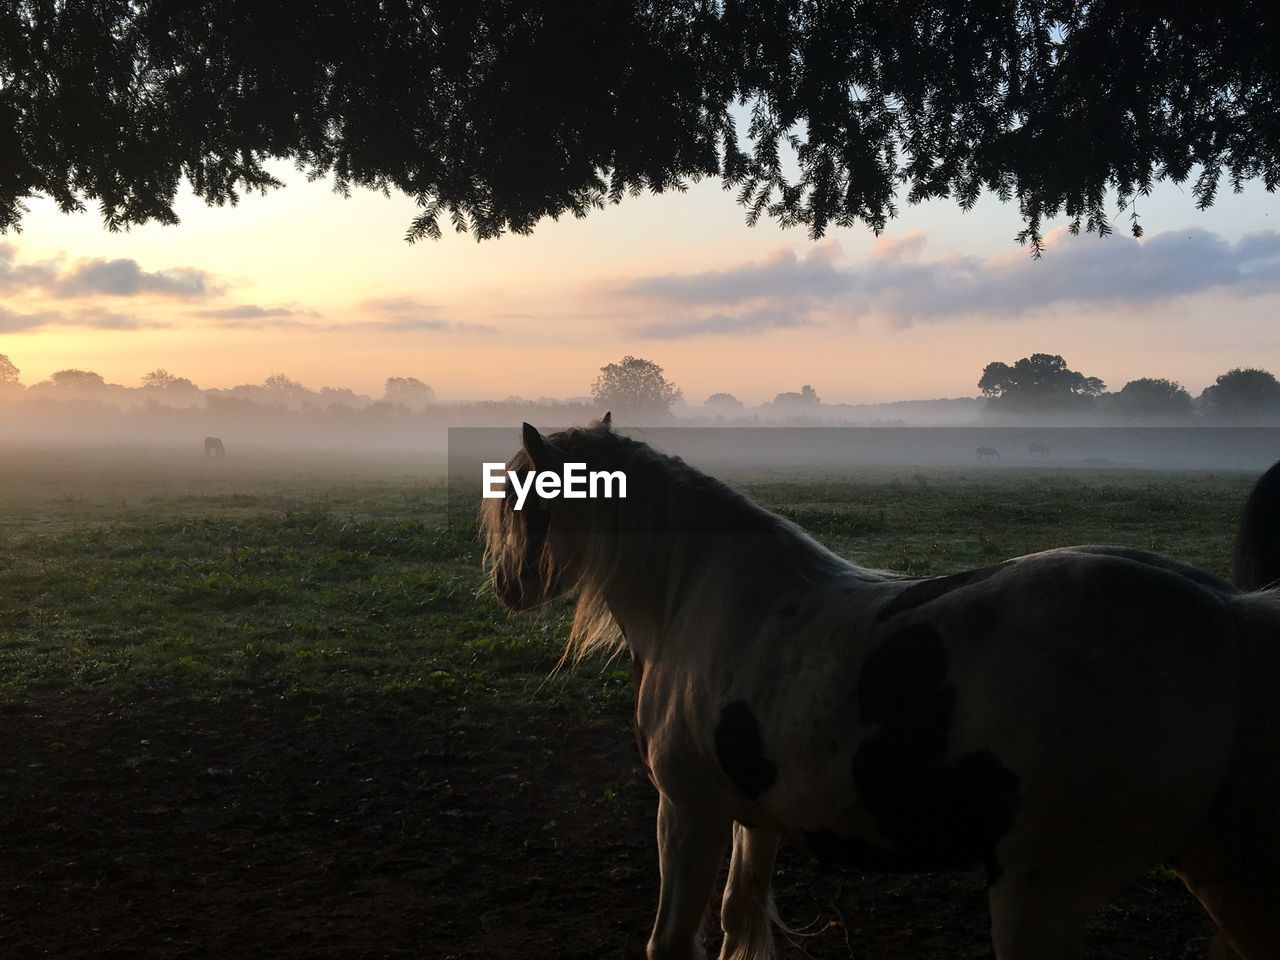 Horse standing in field against misty sunrise 